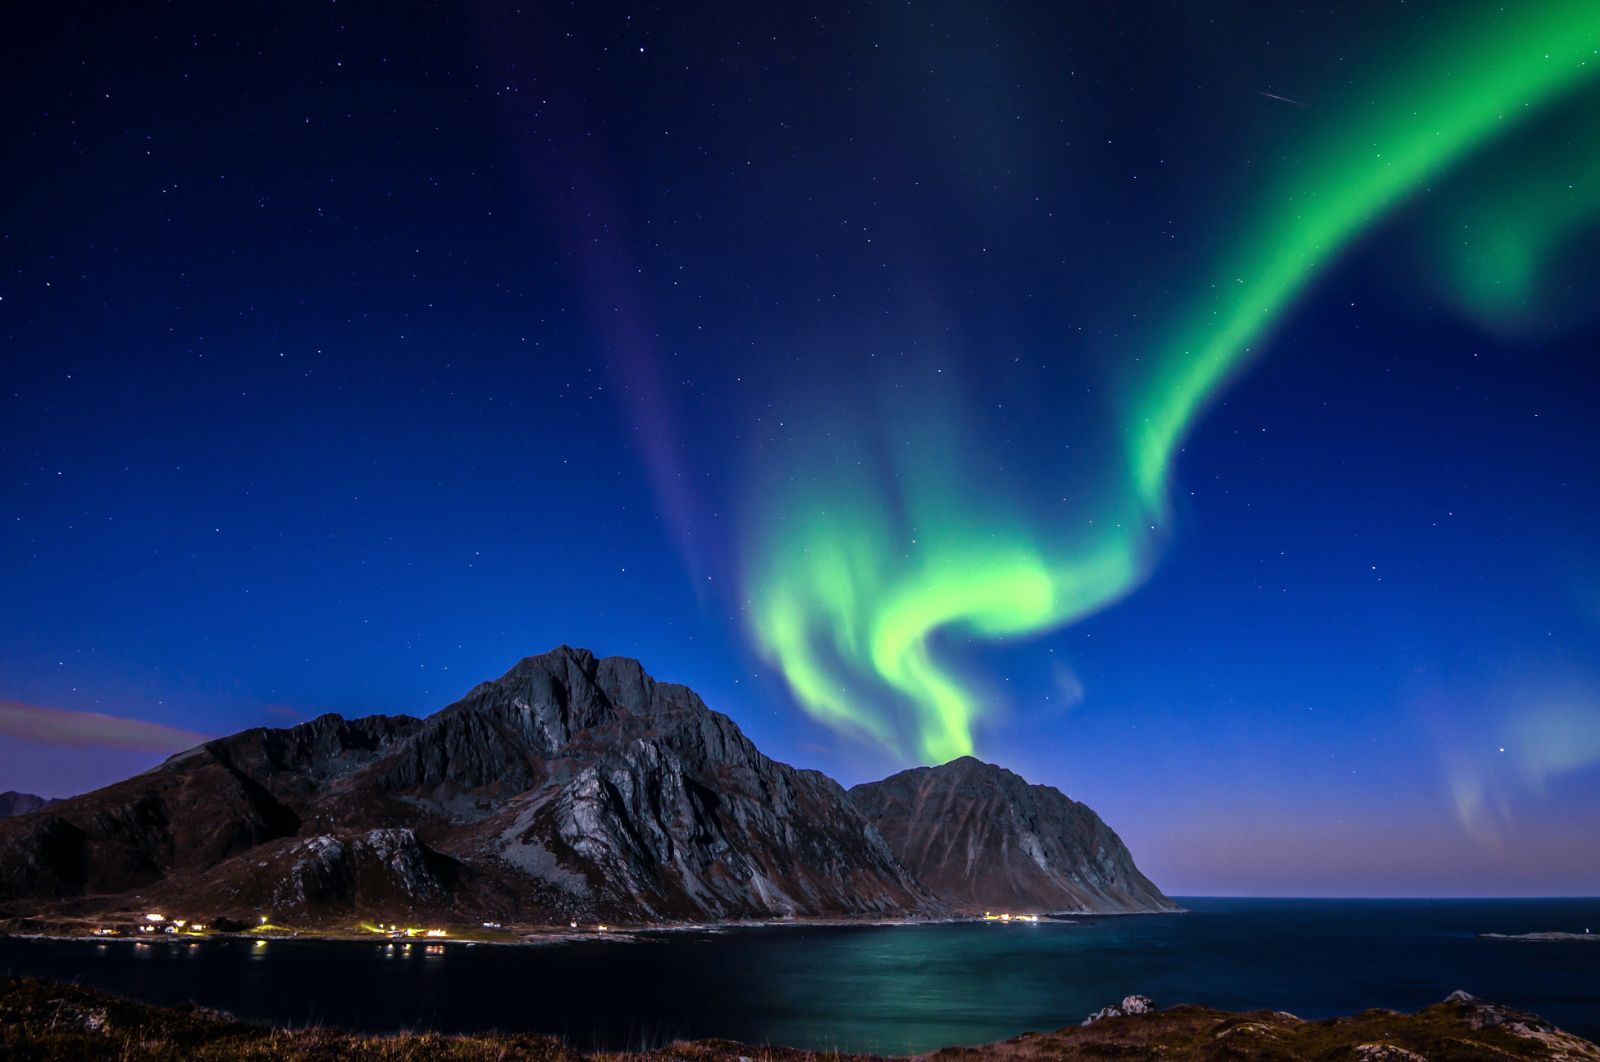 Northern lights viewed from the Lofoten Islands